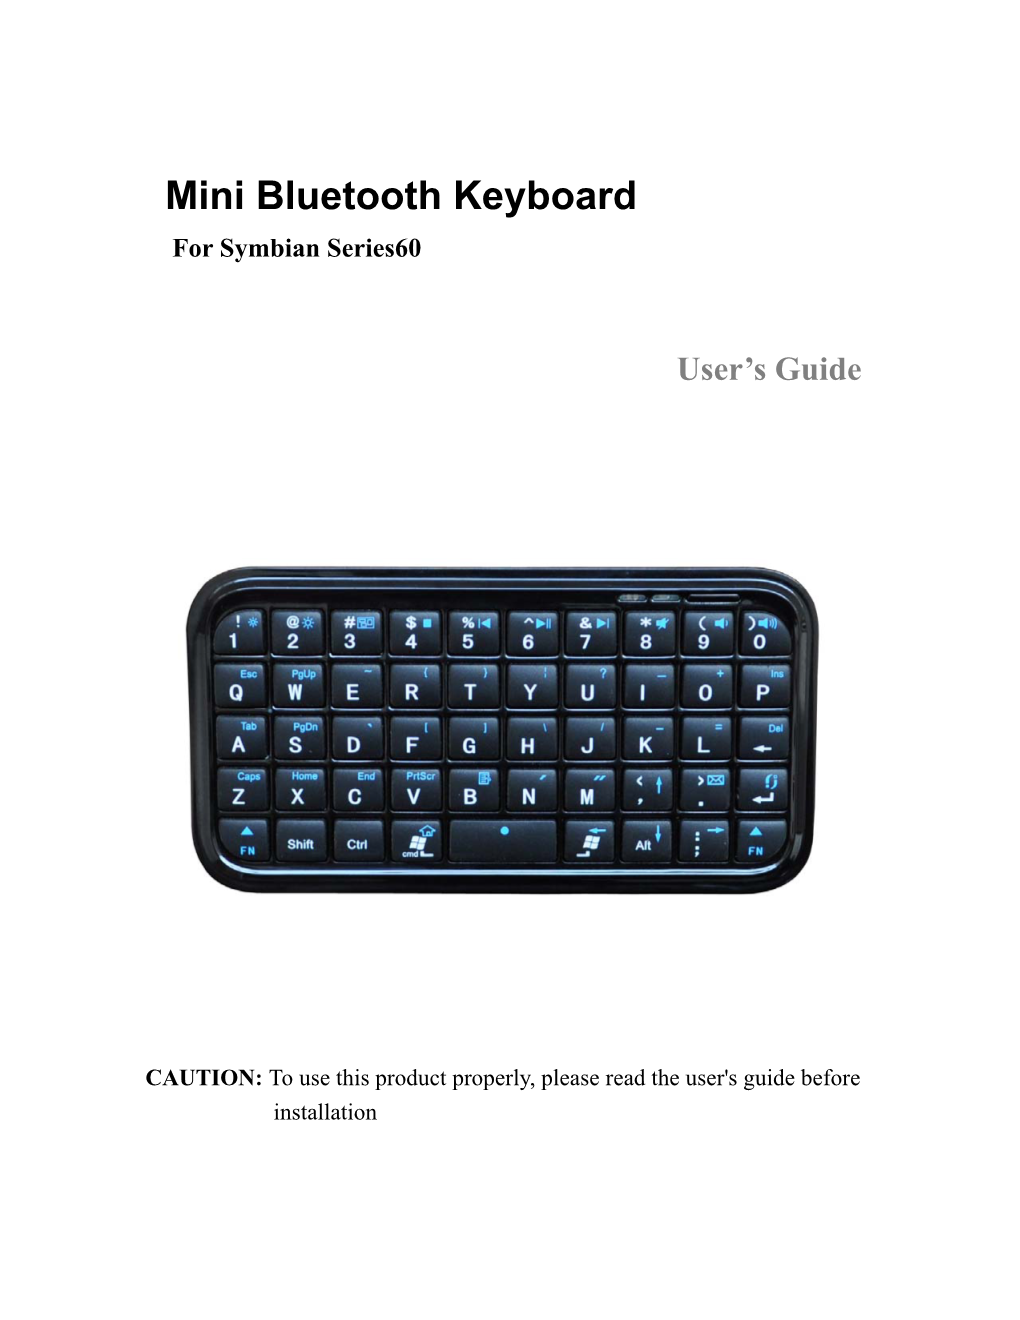 Mini Bluetooth Keyboard for Symbian Series60